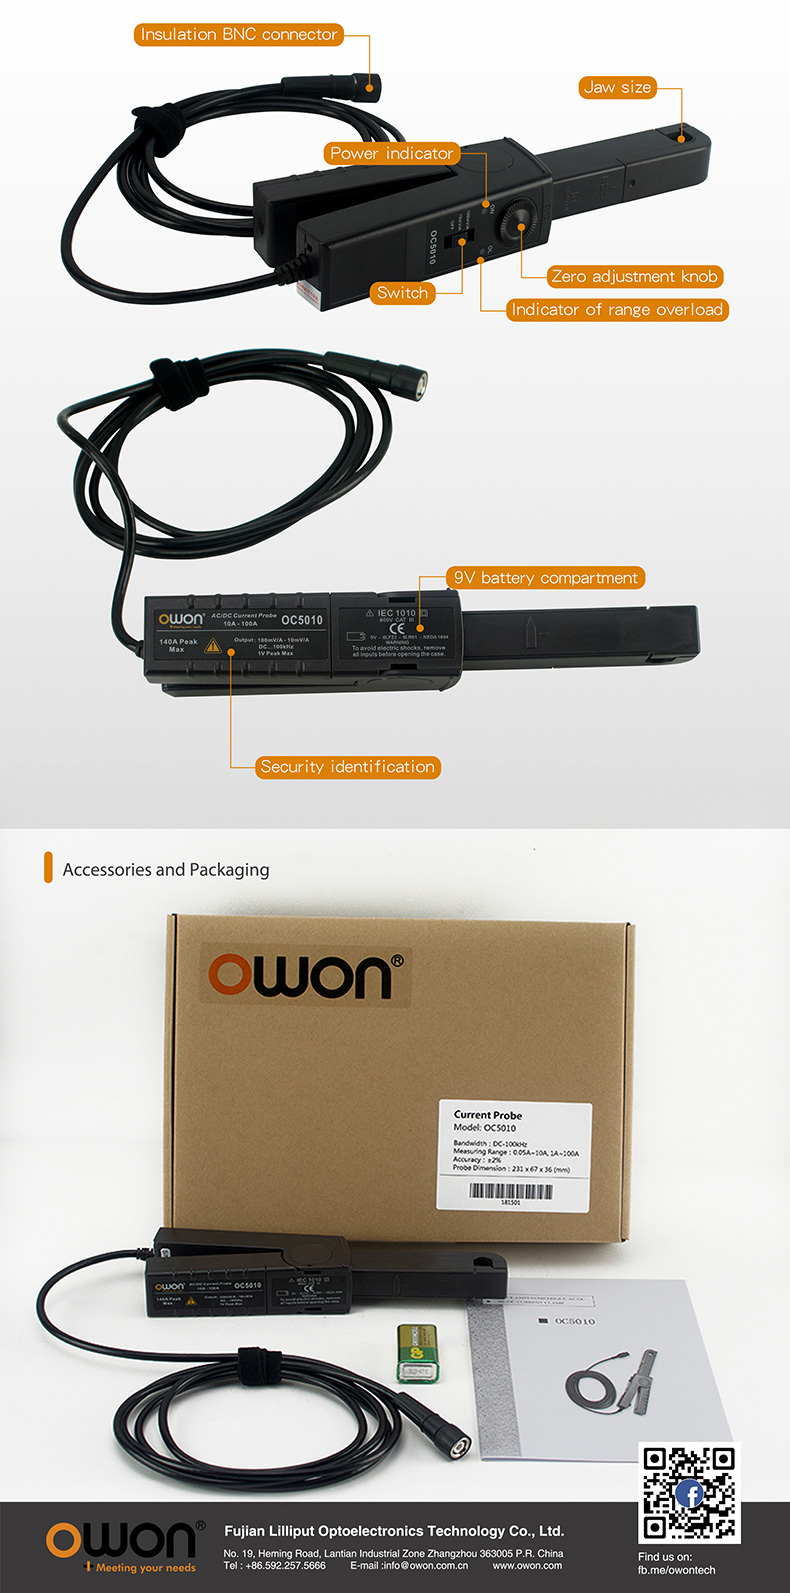 OWON OC5010 AC/DC Current Probe